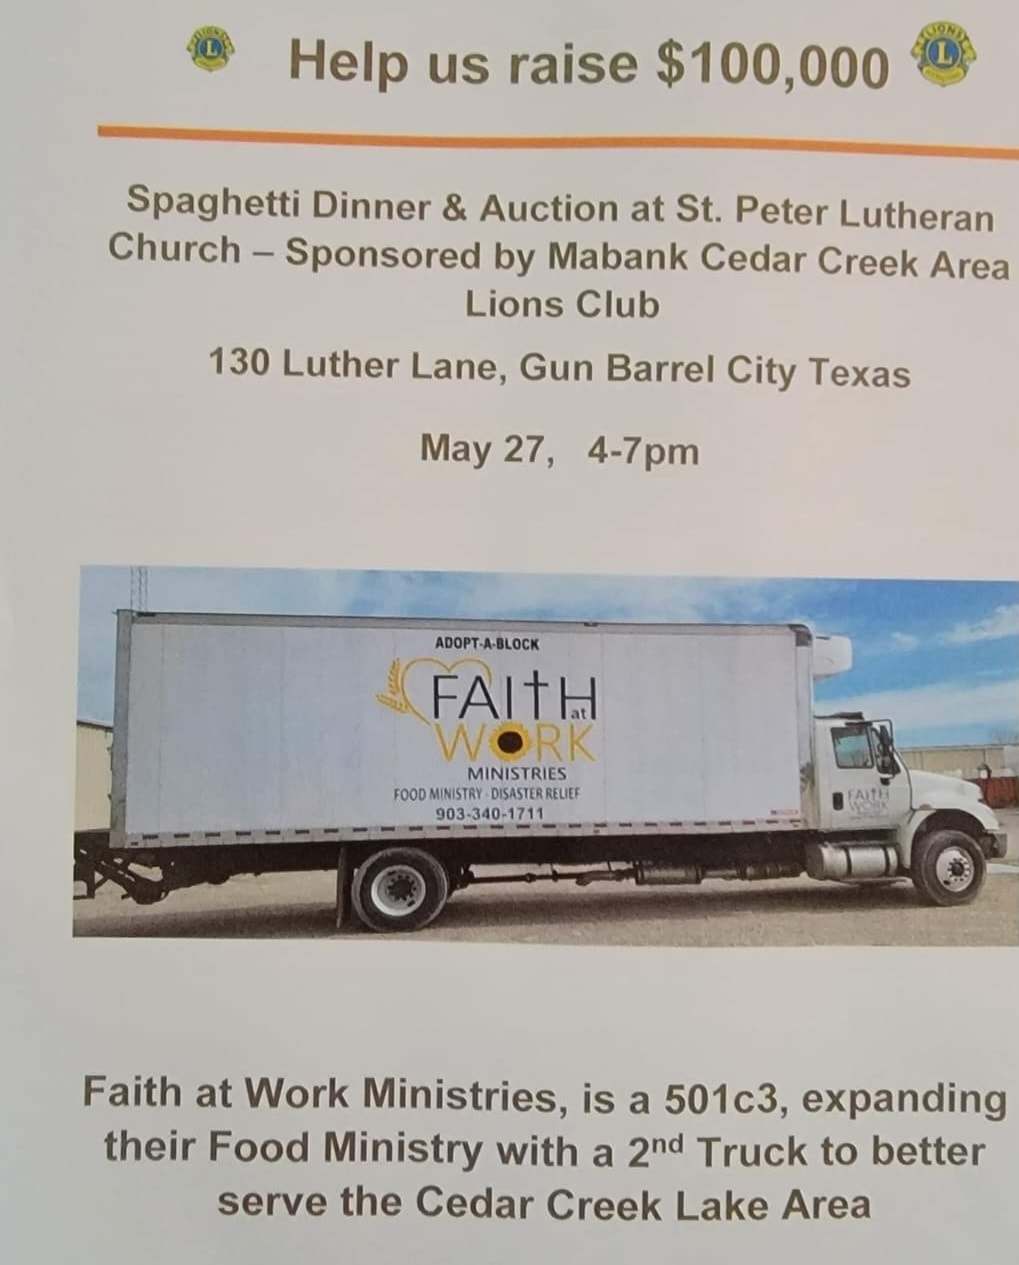 Spaghettis Dinner benefit for Faith At Work Ministries 2 cedar creek lions club CedarCreekLake.Online